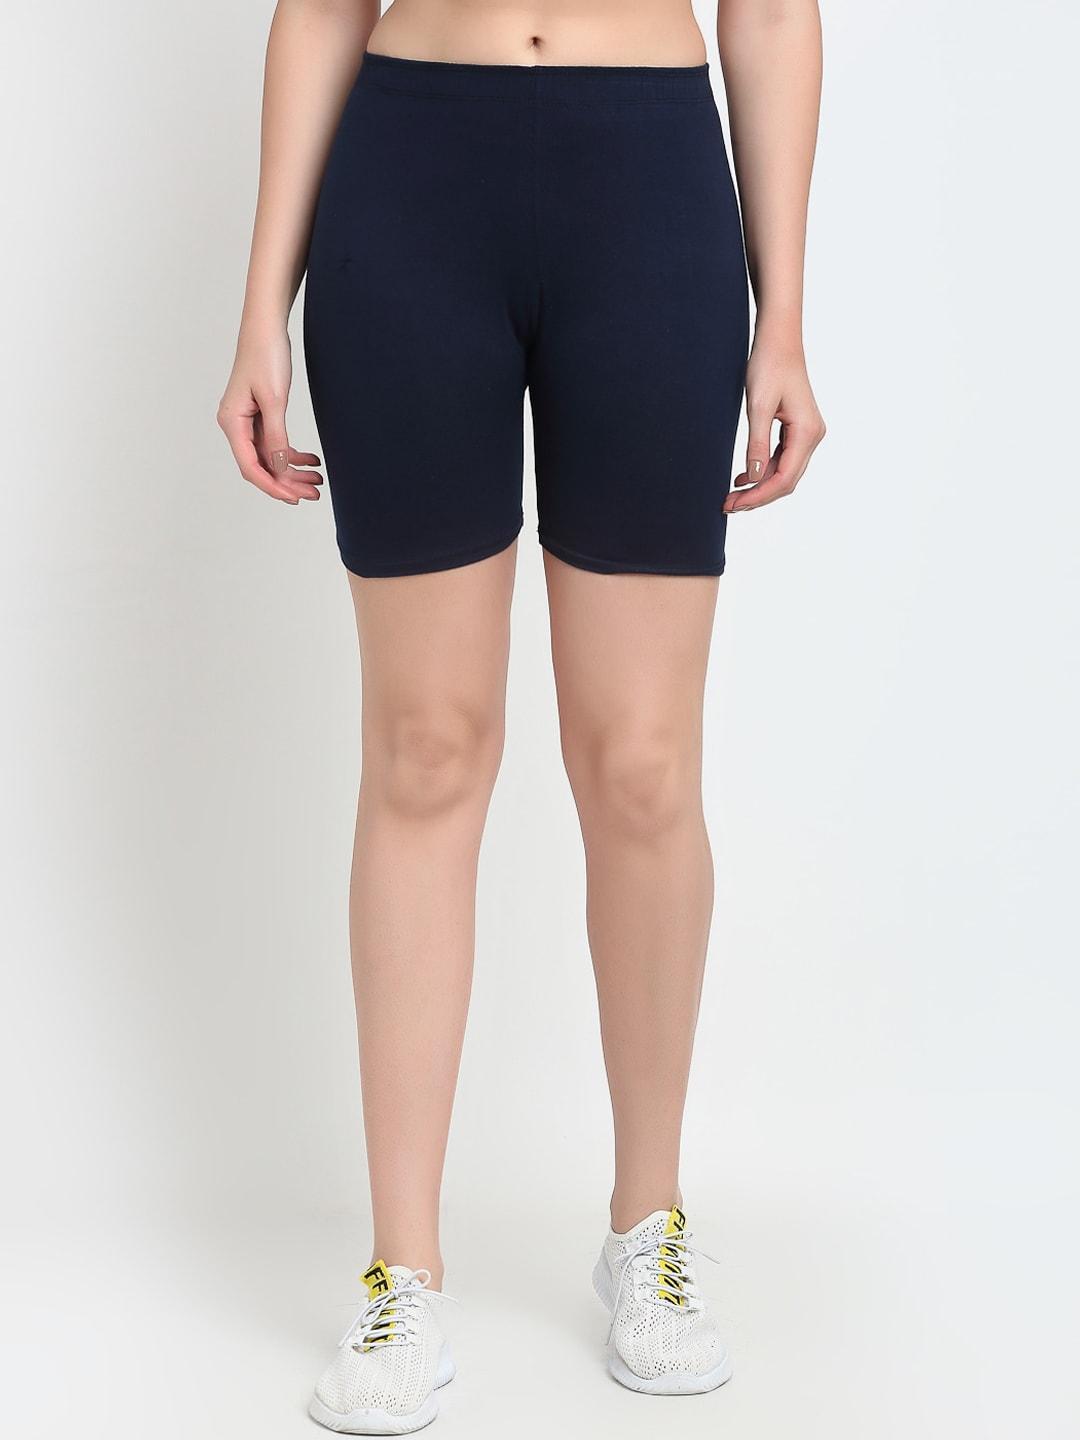 gracit-women-navy-blue-cycling-sports-shorts